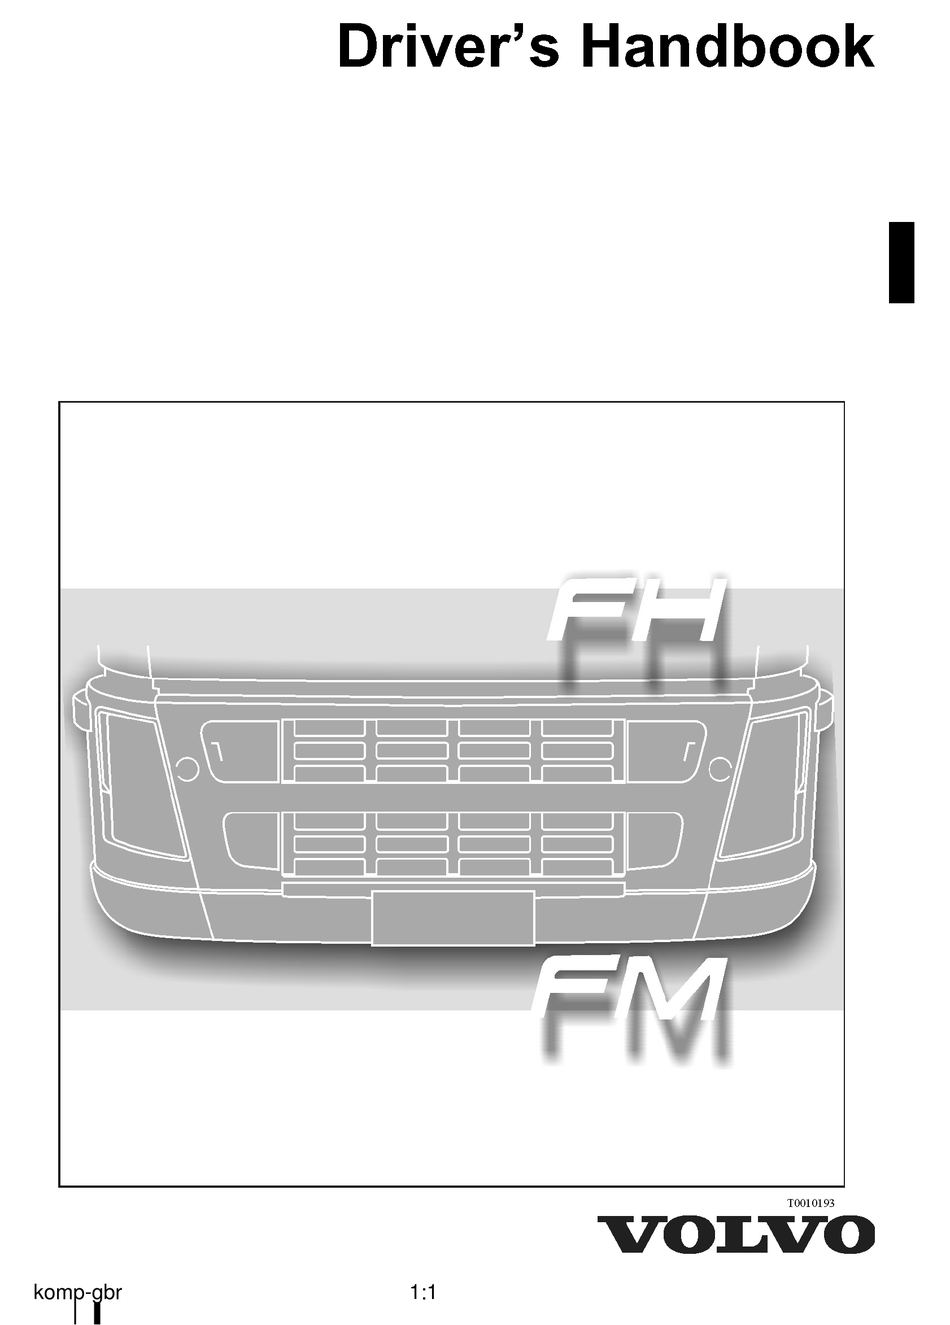 Volvo Fm Driver S Handbook Manual Pdf Download Manualslib